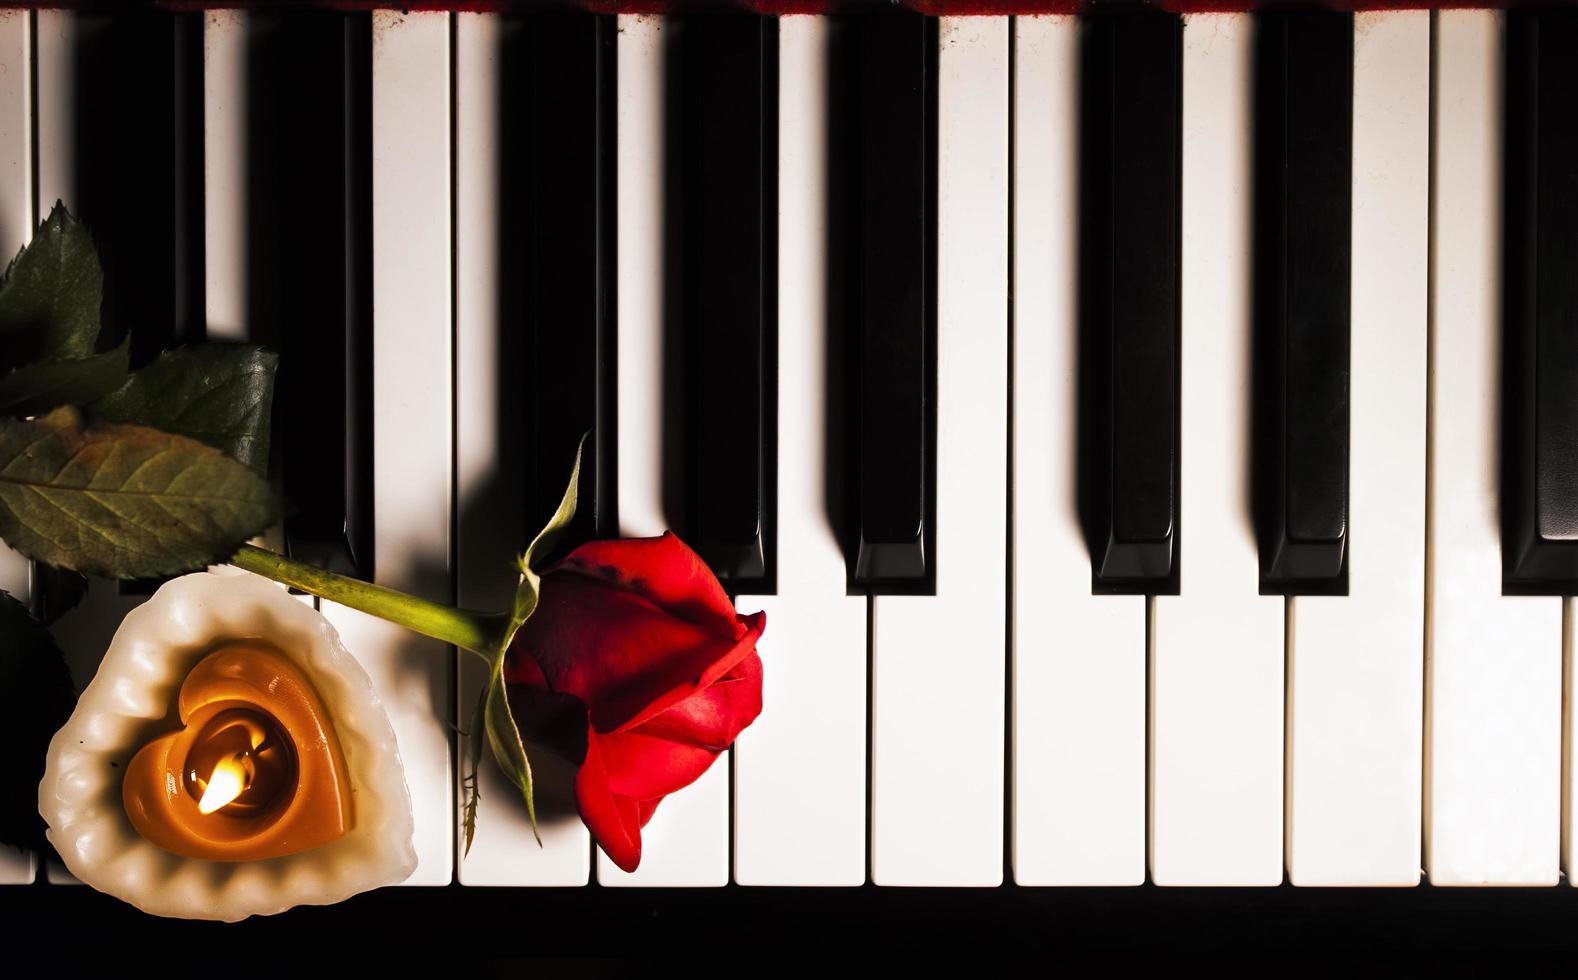 Red Flower Rose on Piano Keys Romantic photo